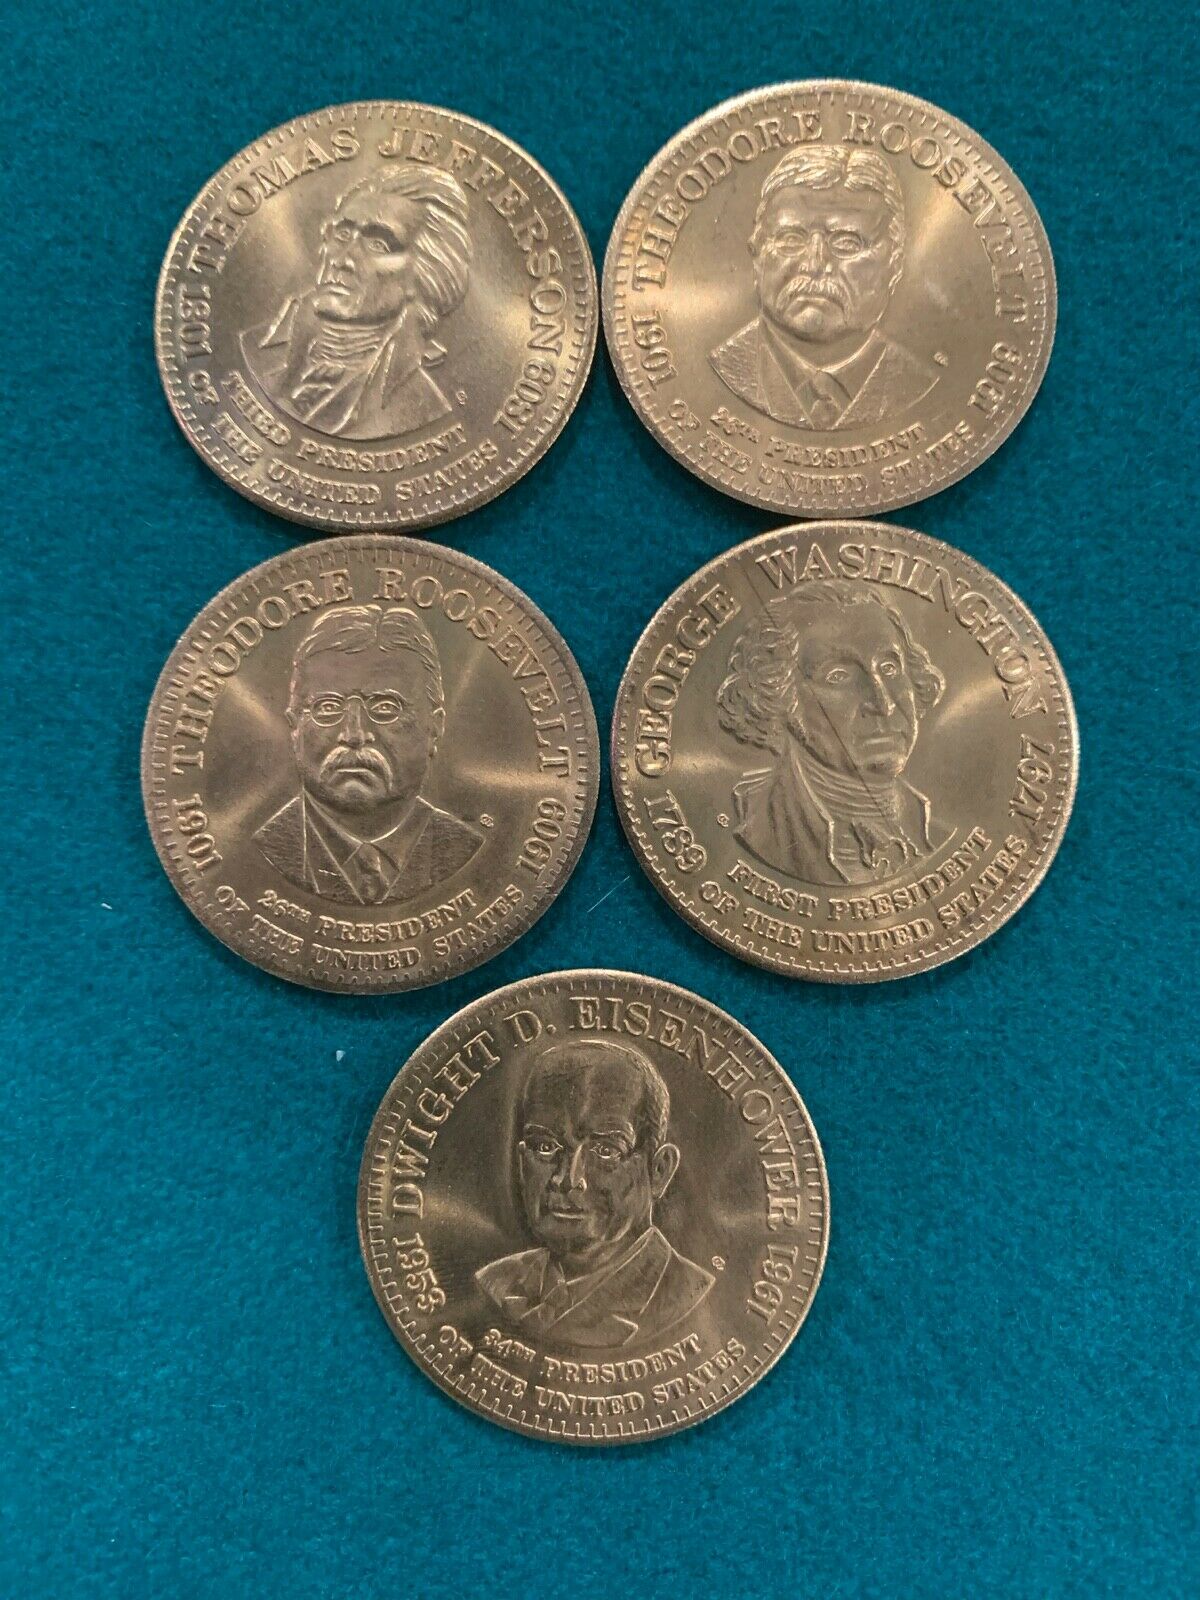 Shell Presidential Collector Coin; Jefferson/washington/eisenhower/roosevelt; 5